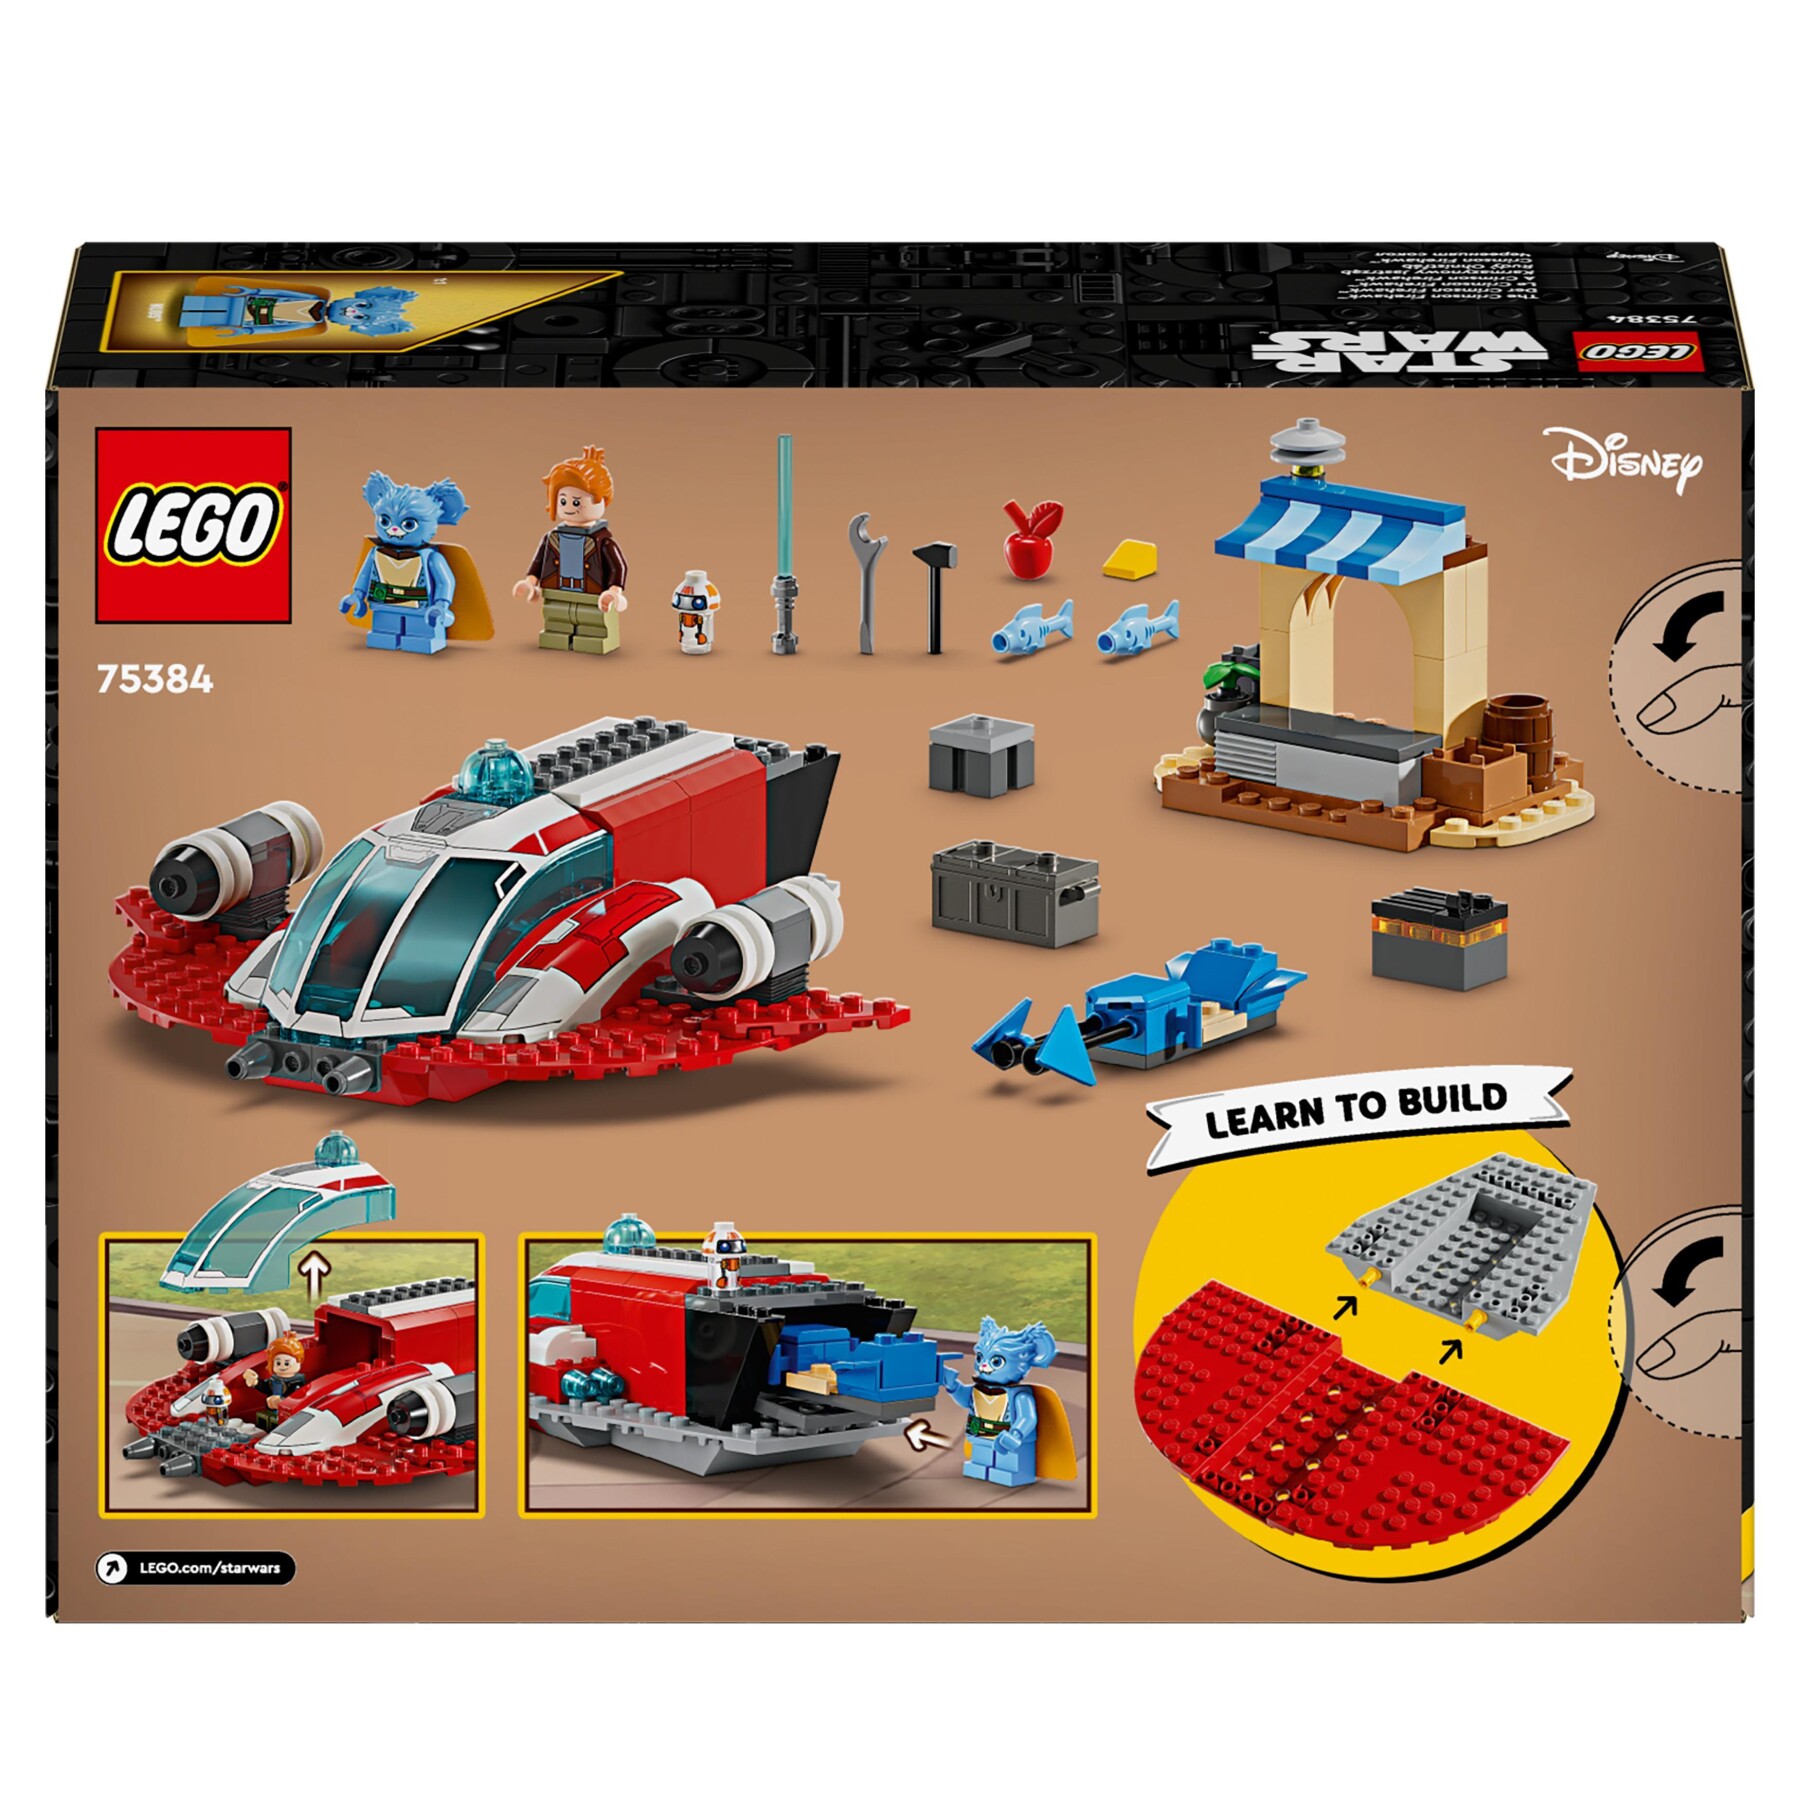 Lego star wars 75384 the crimson firehawk, starter set con astronave giocattolo, speeder bike e 3 personaggi, regalo bambini 4+ - LEGO® Star Wars™, Star Wars